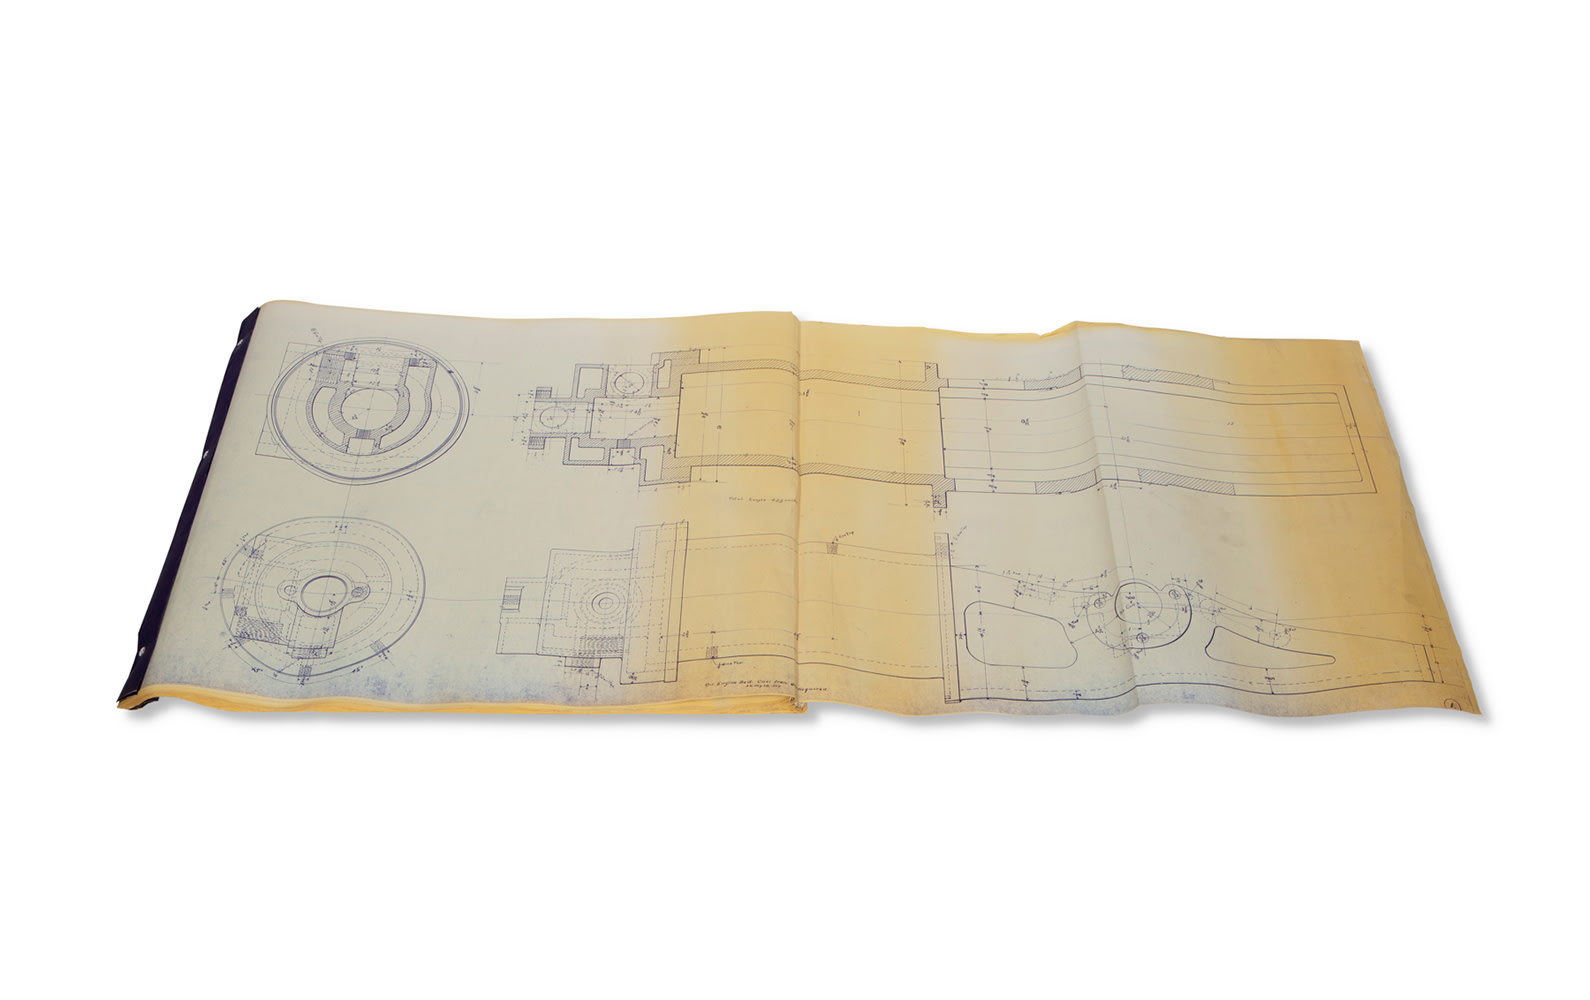 Packard Blueprints, c. 1900 (Reproduction)